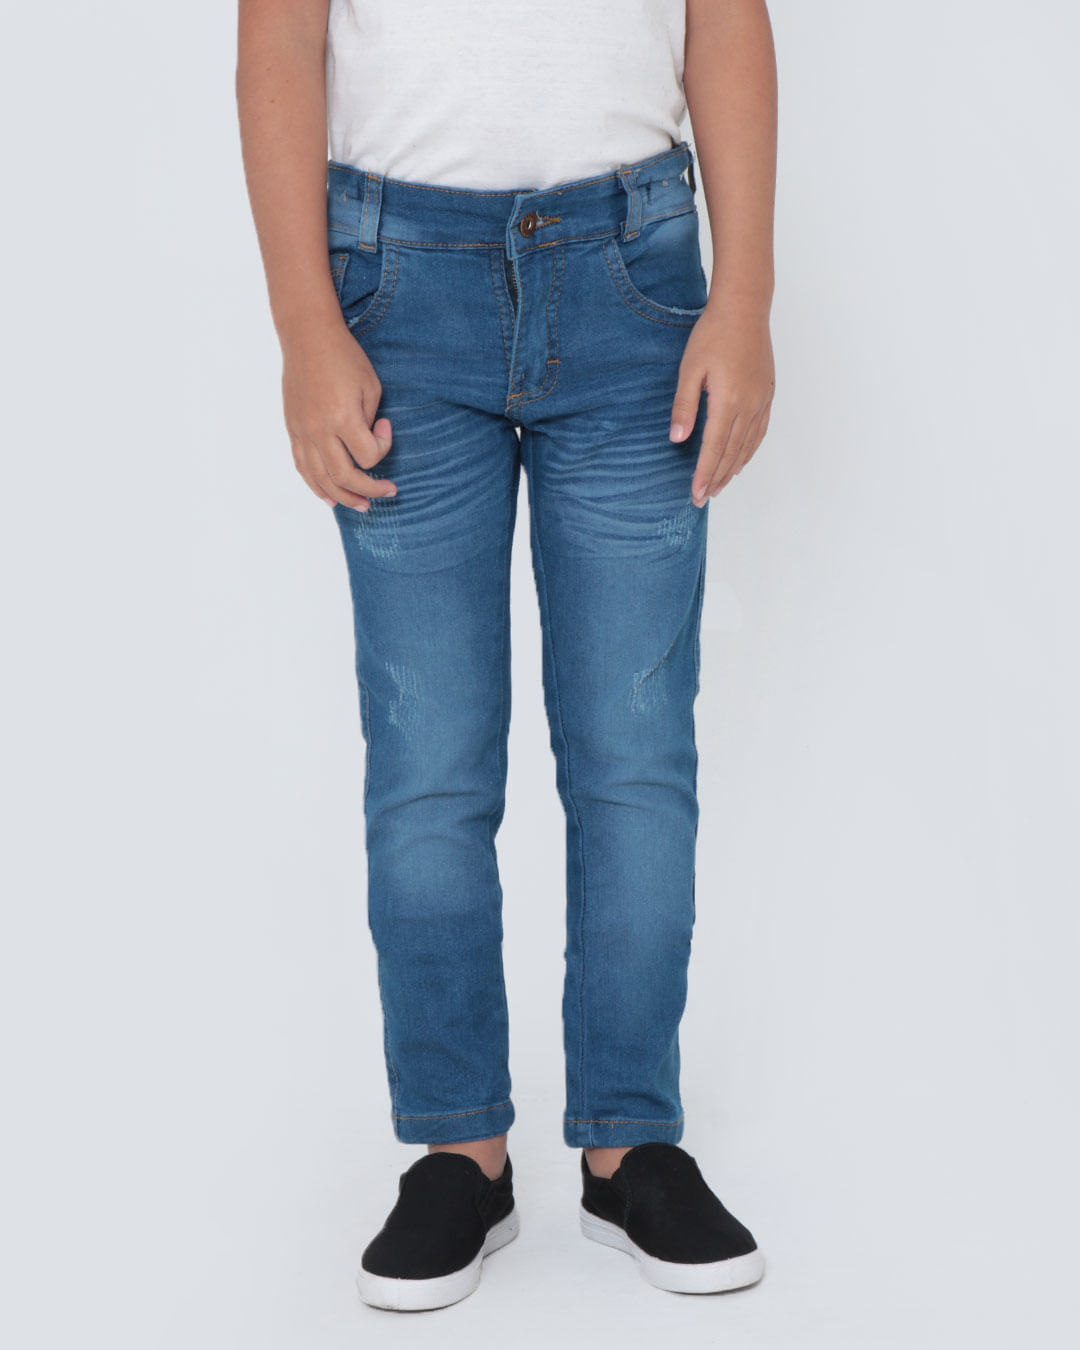 Calca-4525--Jeans-Medio-M-48---Blue-Jeans-Medio